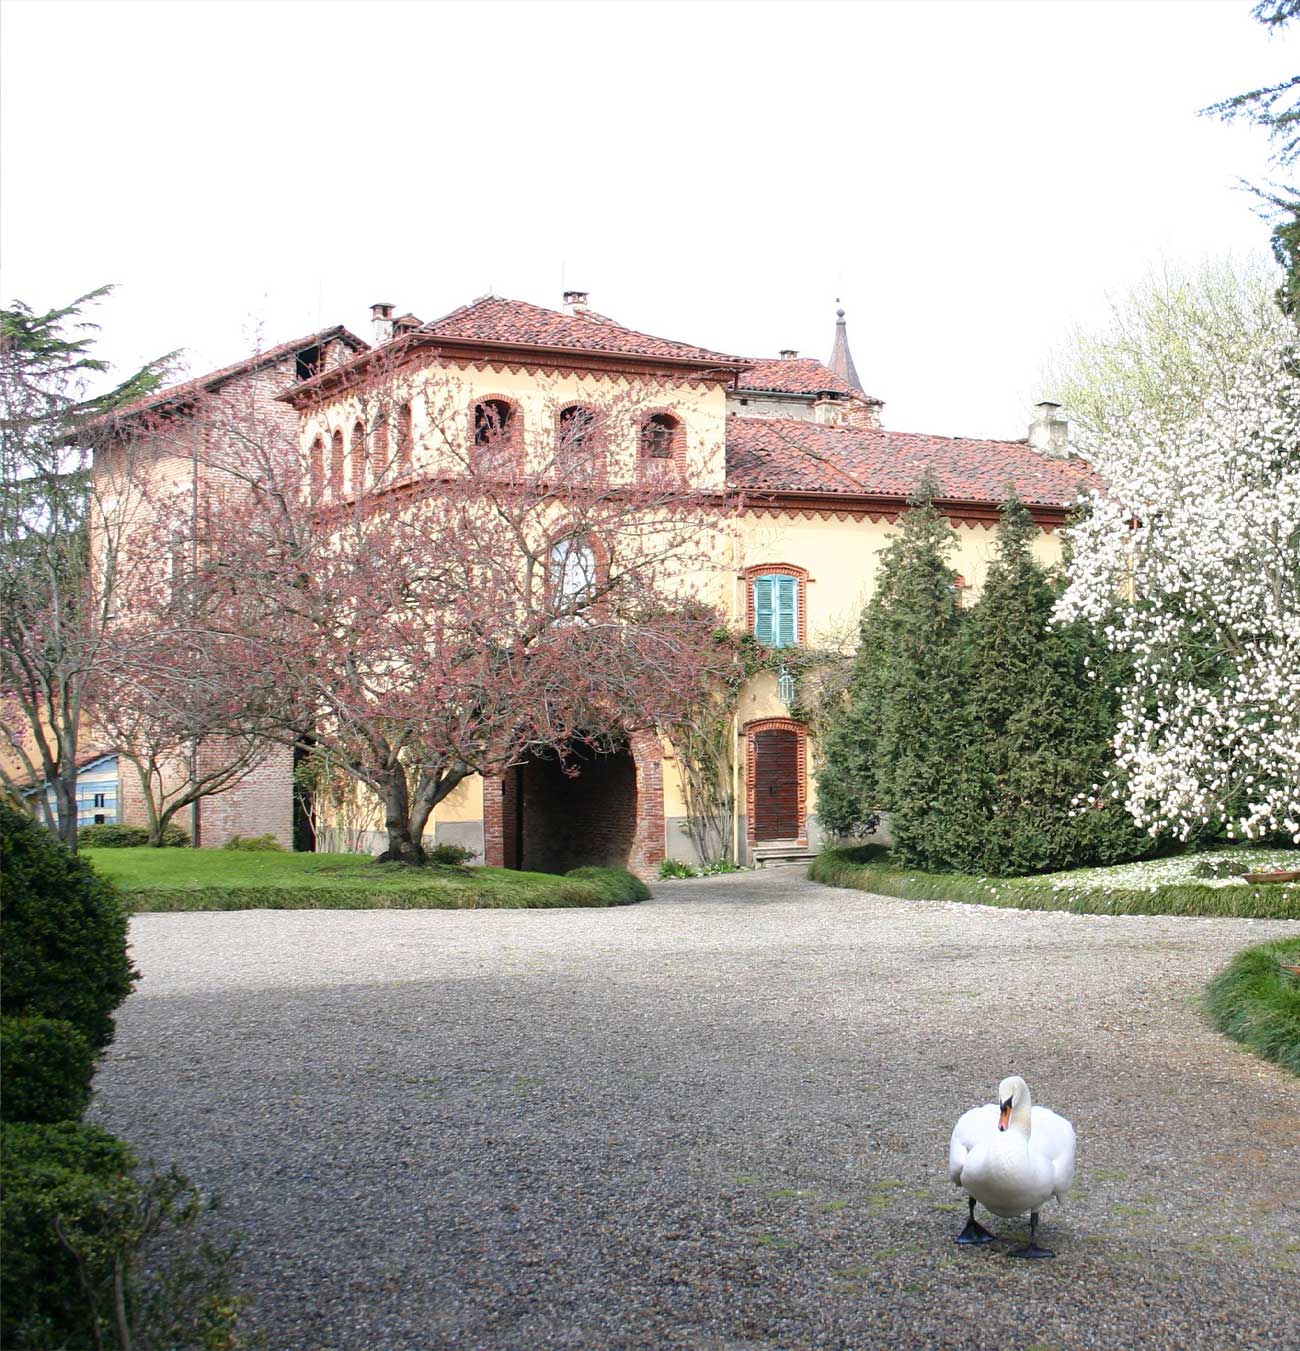 Castello di Casalino - Wedding Visit Piemonte